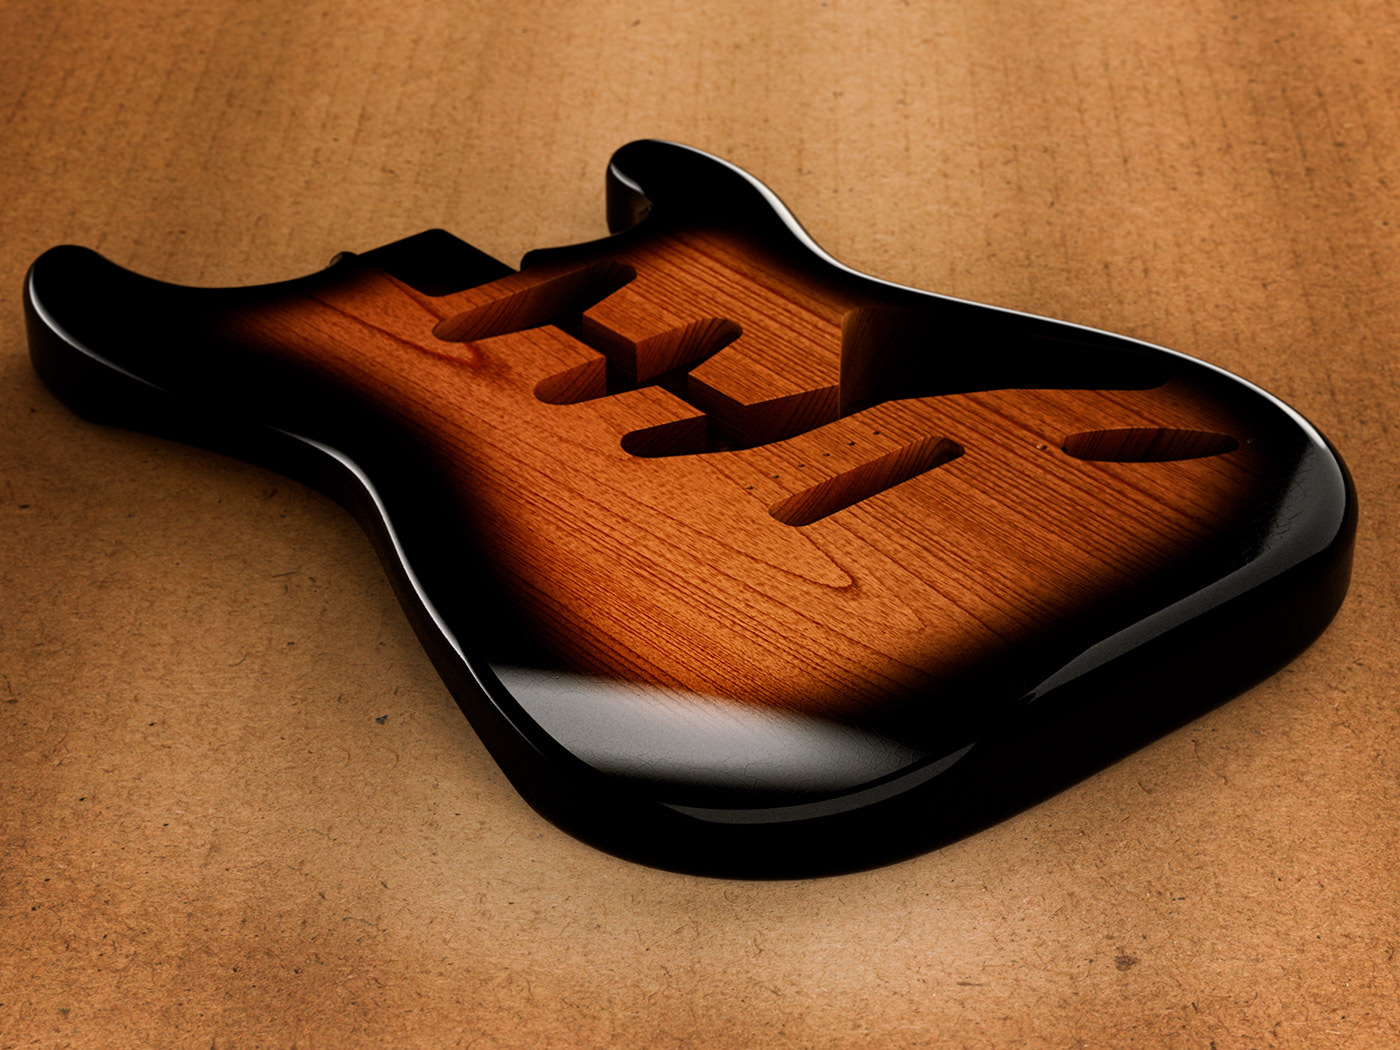 fender stratocaster CGI Render visualization guitar